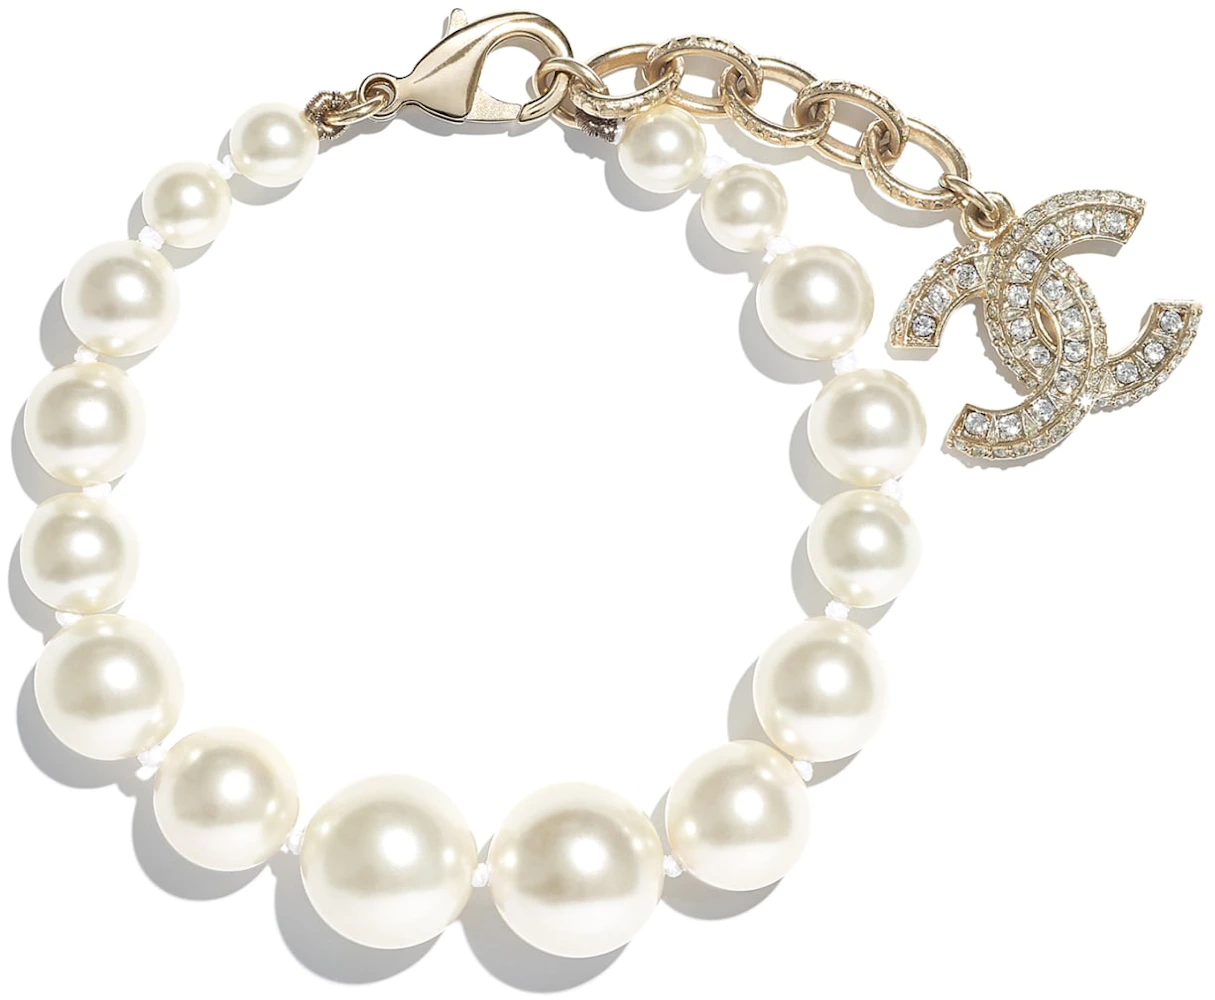 Chanel Interlocking Bracelet Gold/White/Crystal in Pearls/Strass US